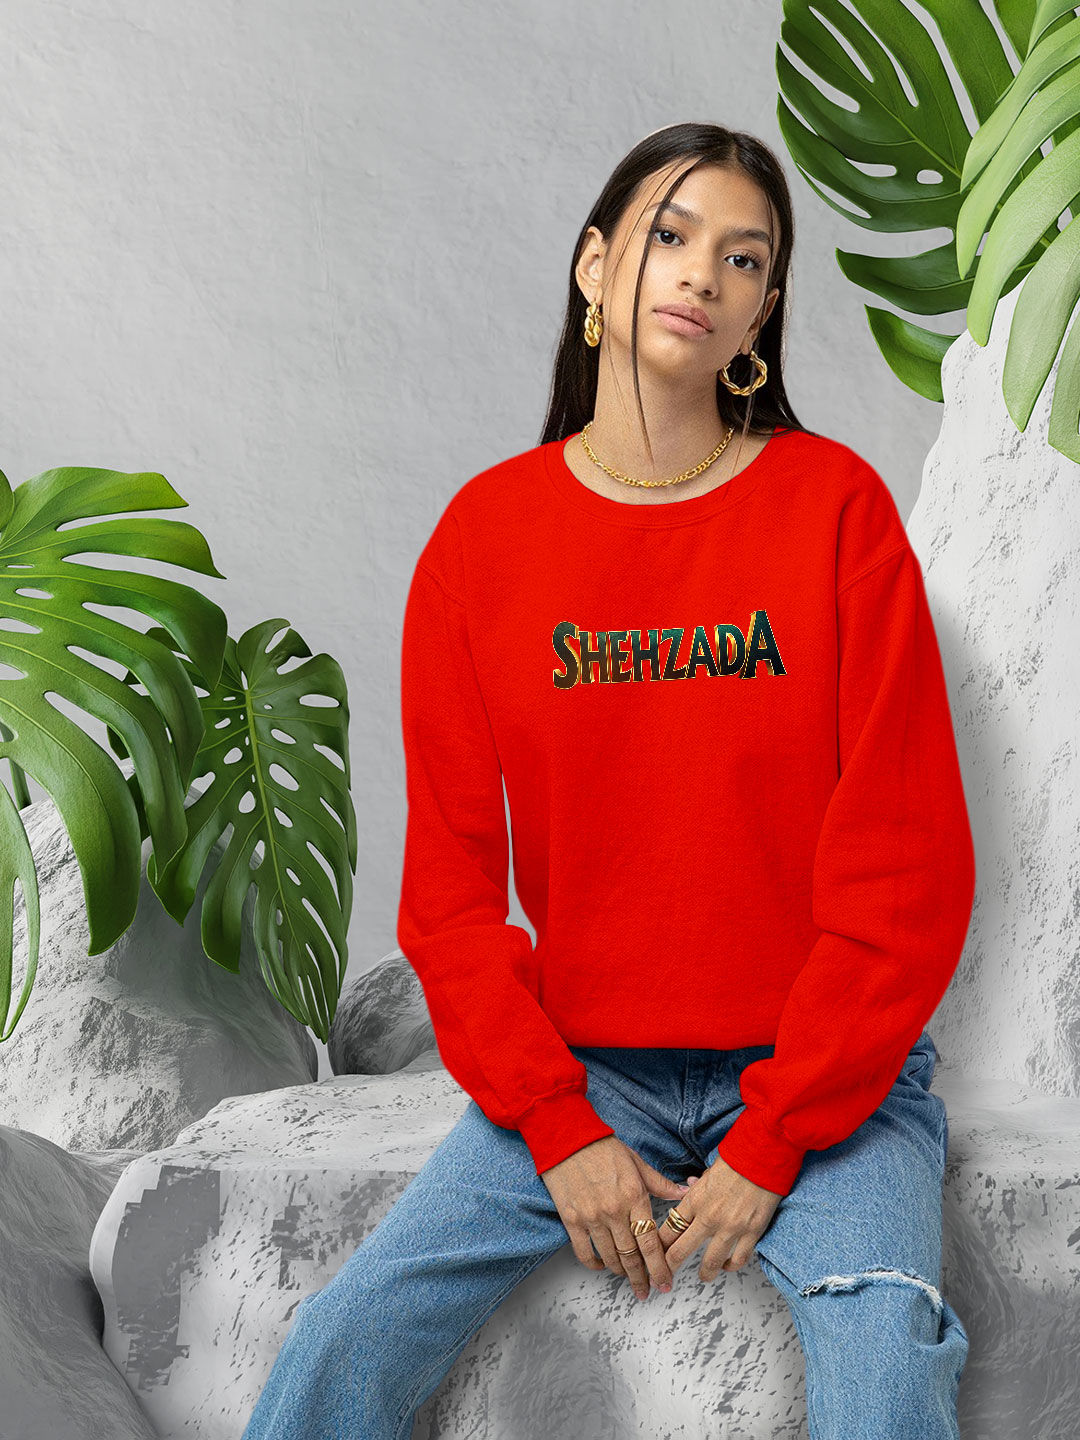 Shehzada - Womens Designer Sweatshirt